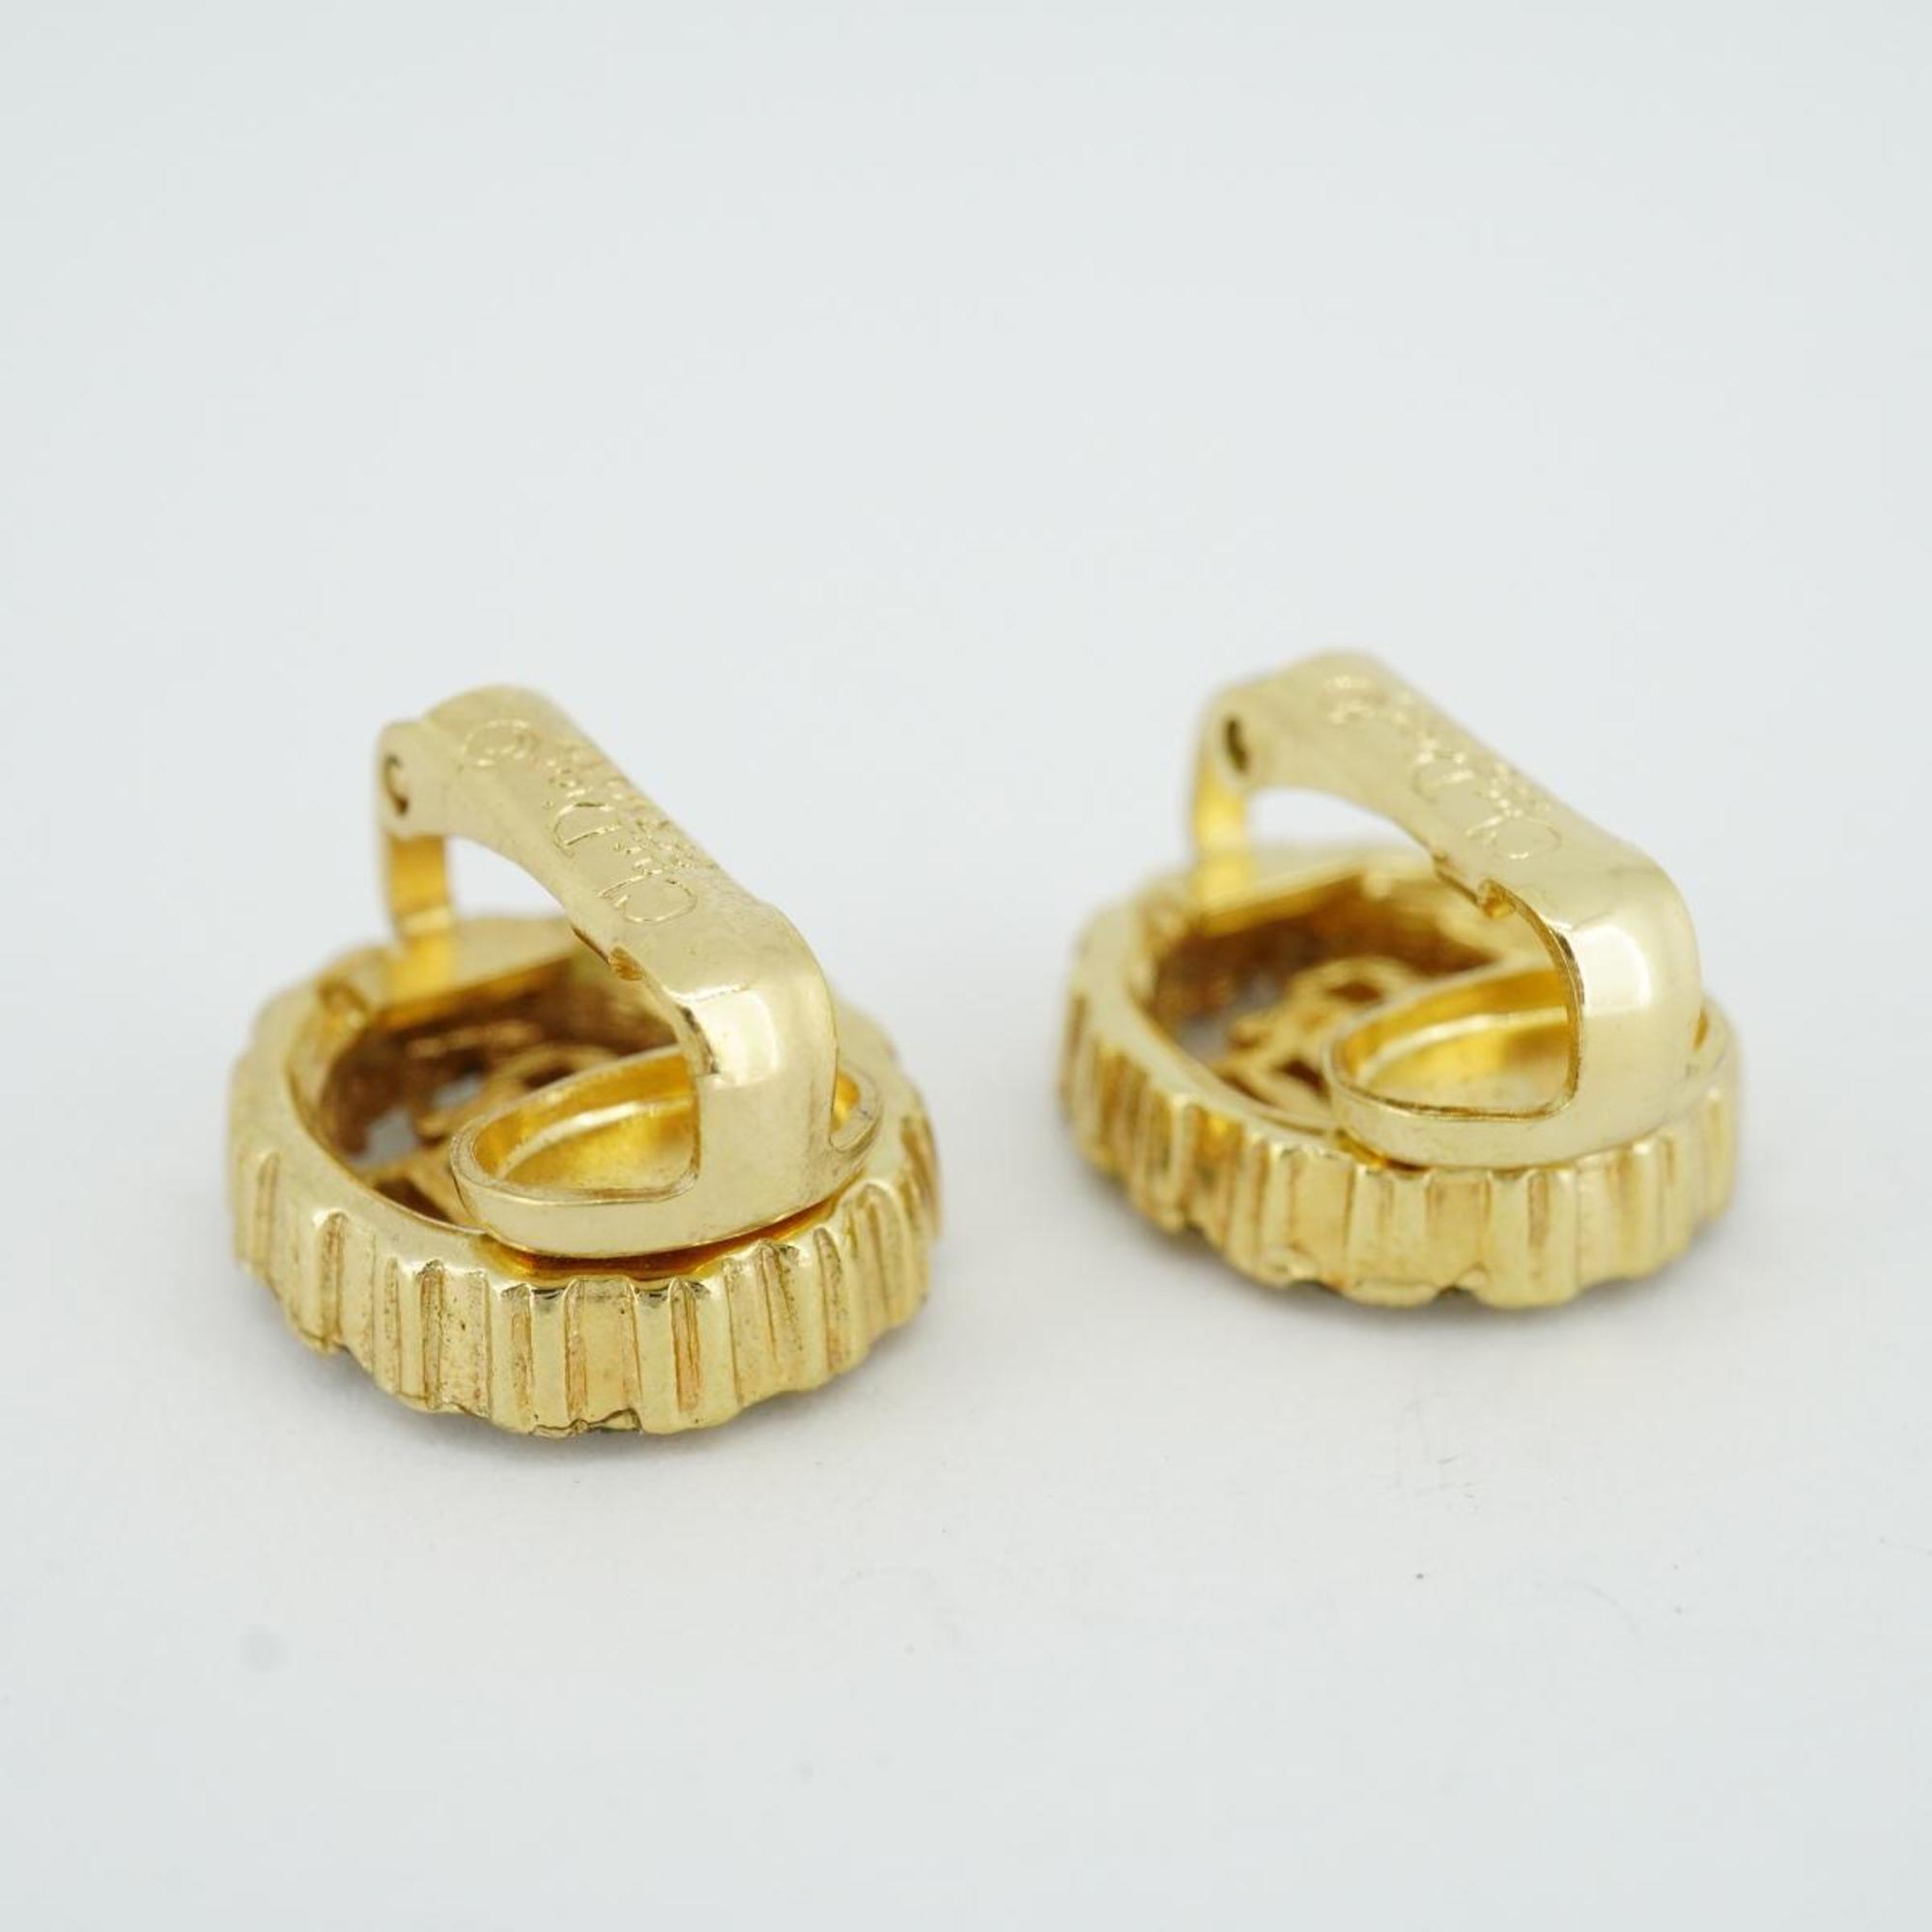 Christian Dior Earrings Oval Rhinestone GP Plated Gold Women's